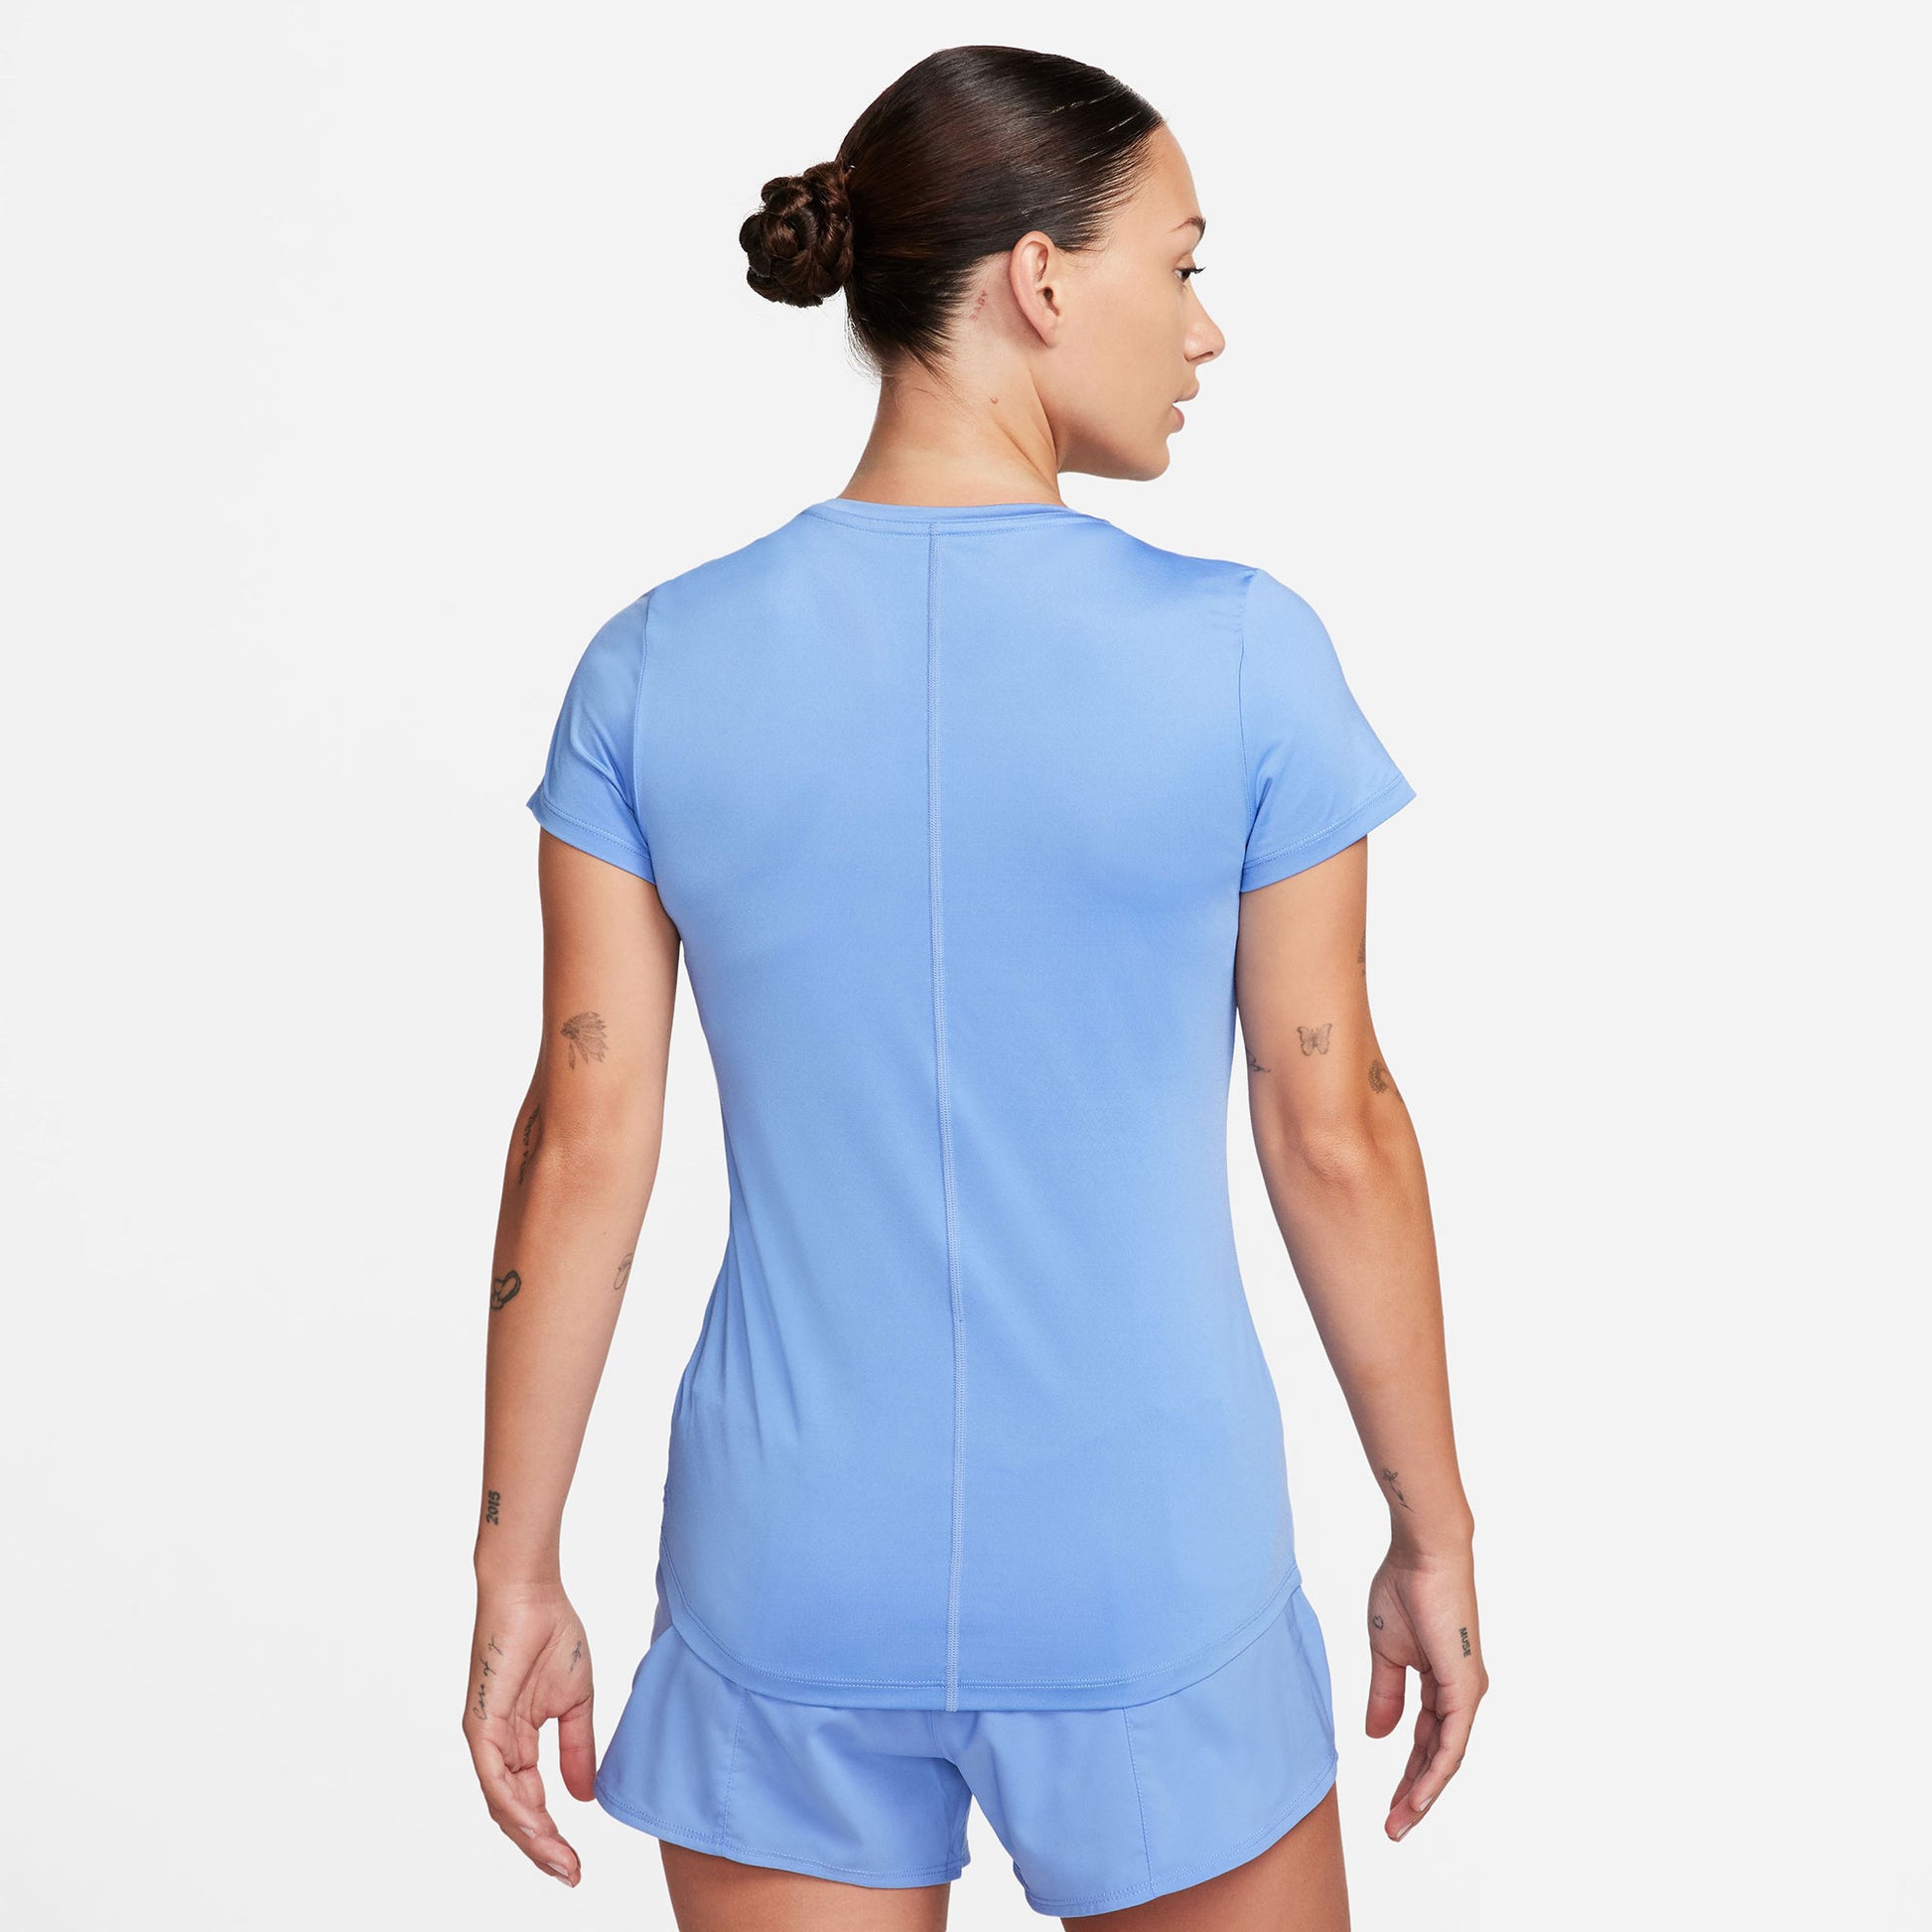 Nike One Dri-FIT Women's Slim Top Blue (2)